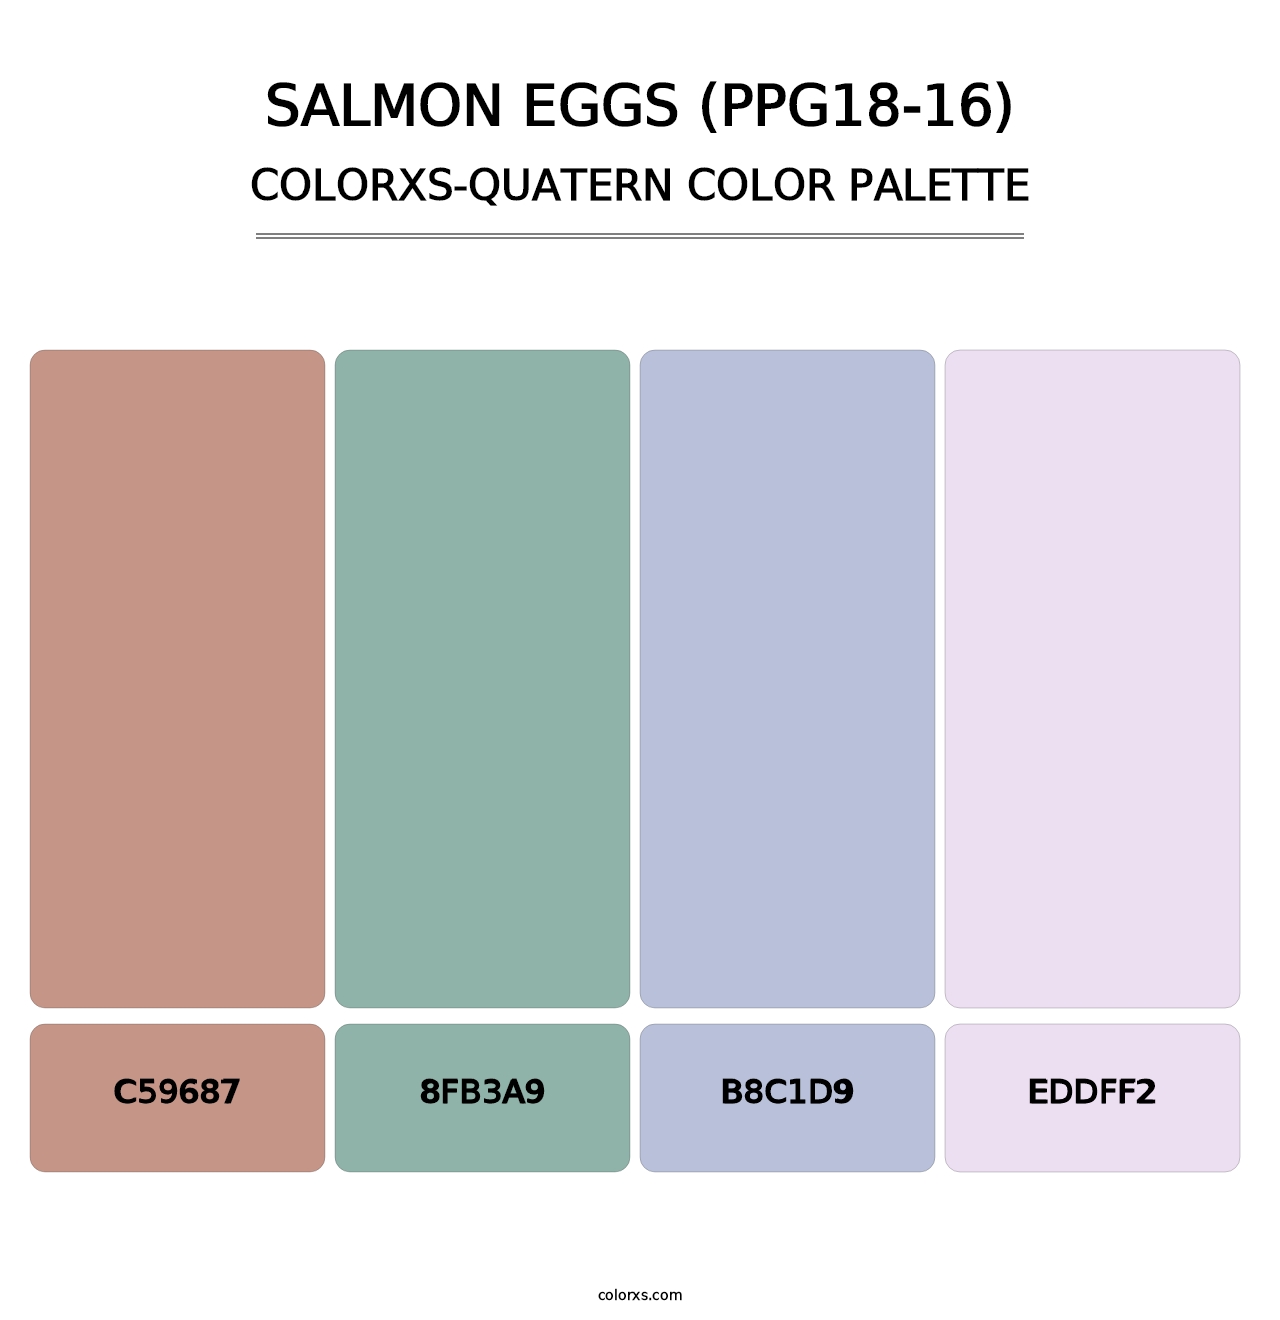 Salmon Eggs (PPG18-16) - Colorxs Quatern Palette